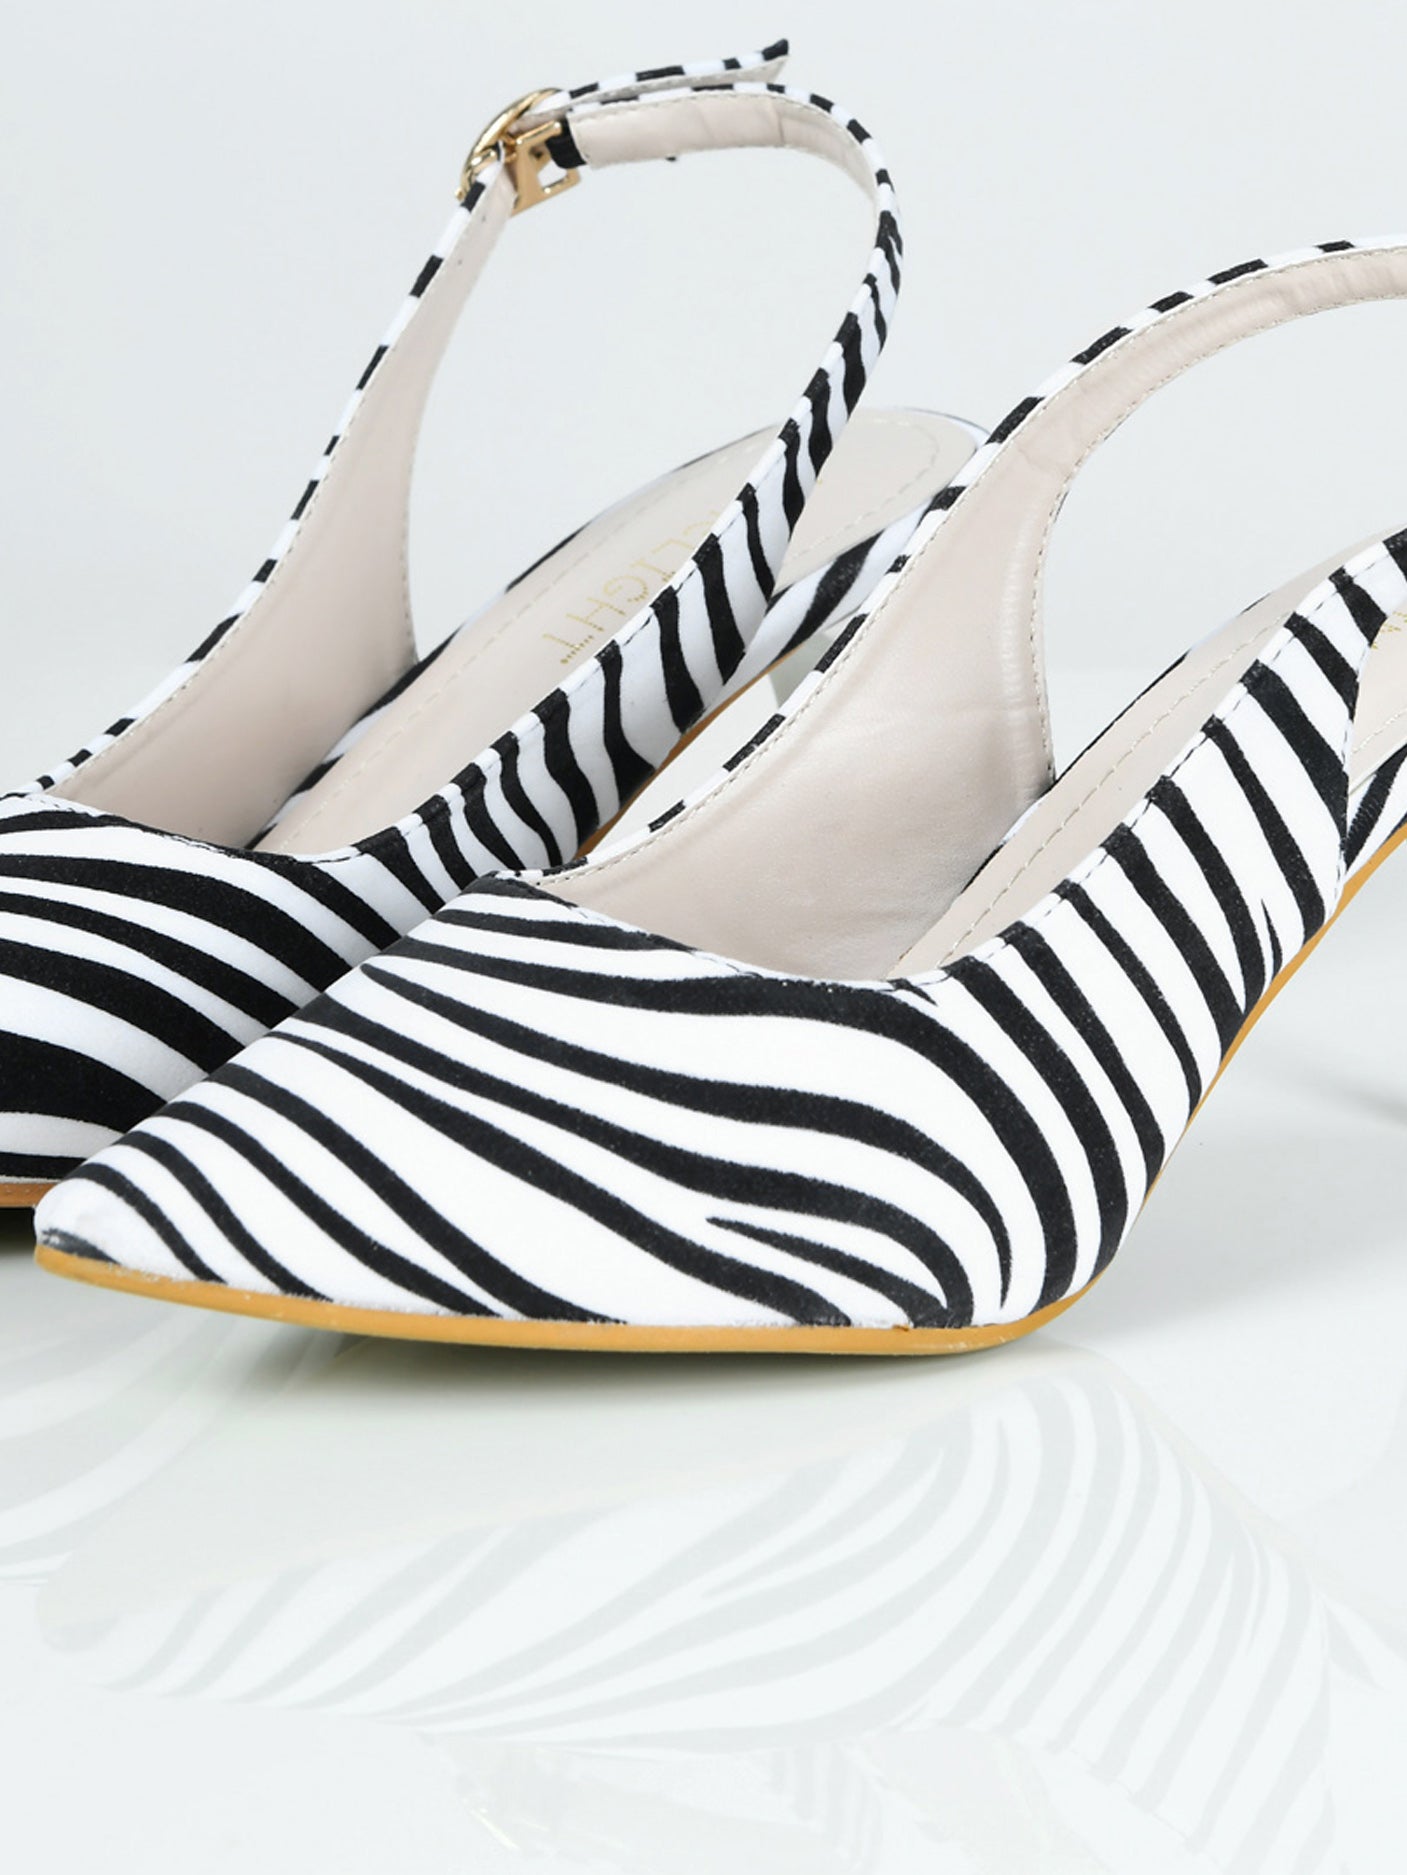 Zebra Print Heels - Black and White